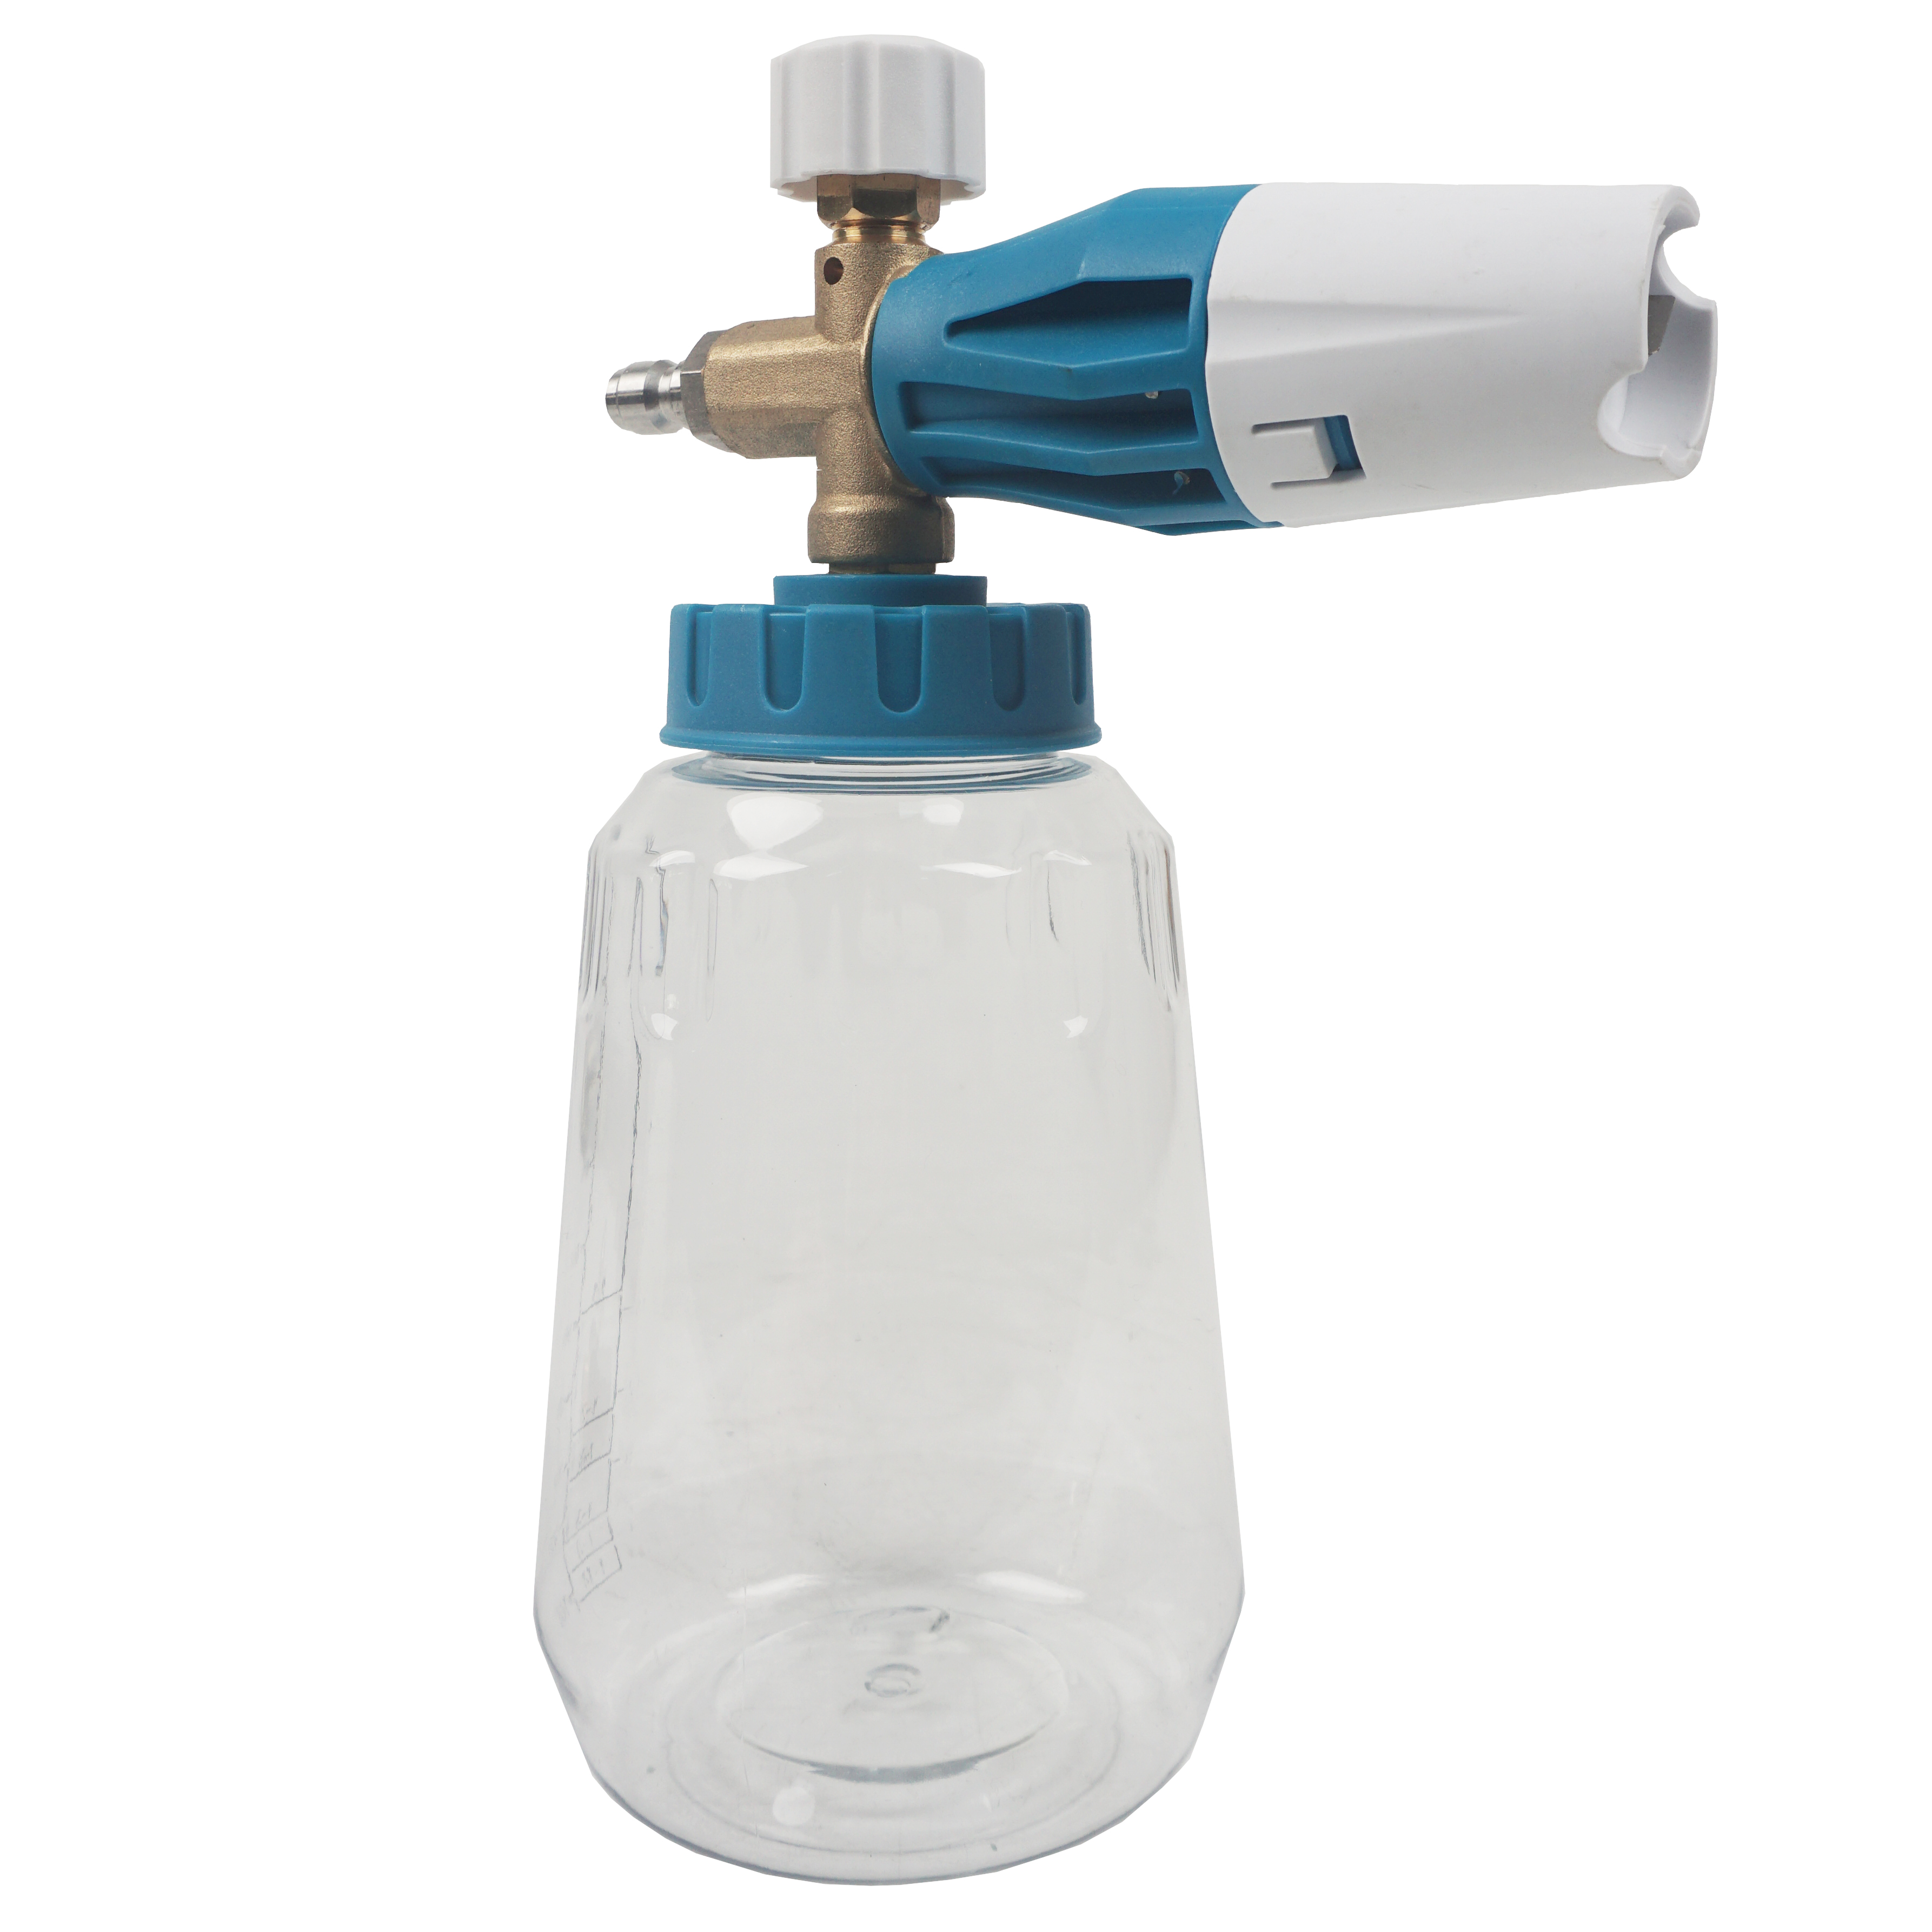 Biltvättskumflaska Högtryck Snöskum Lance Soap Bottle With Connector Auto Cleaning Tools